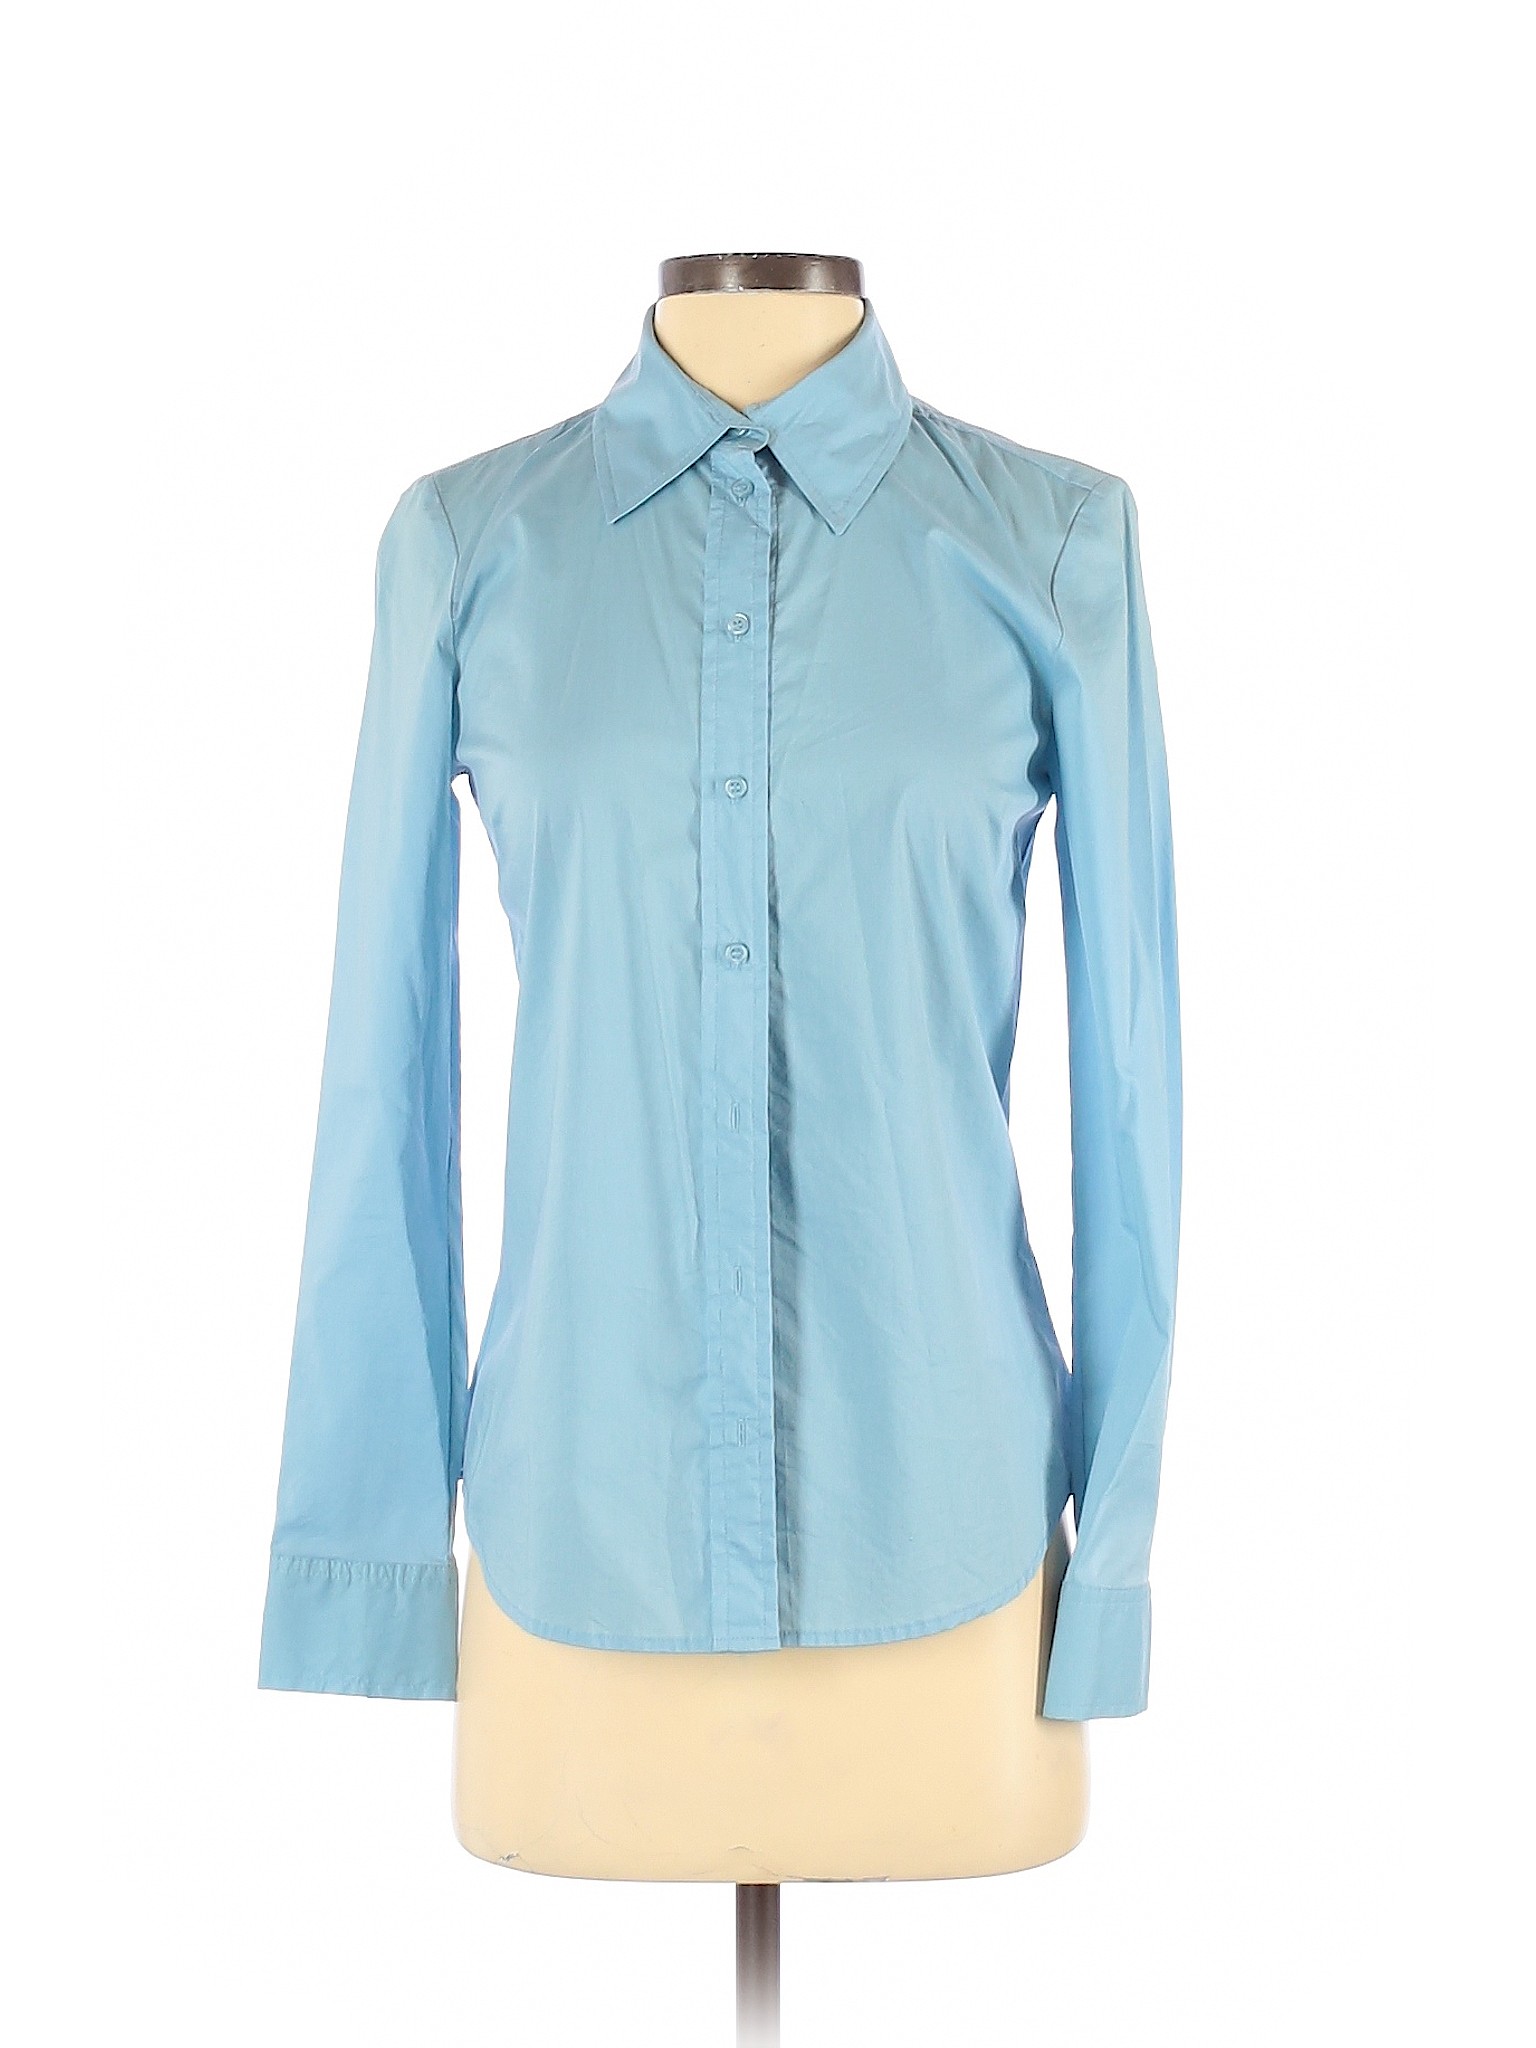 Forever 21 Women Blue Long Sleeve Button-Down Shirt S | eBay